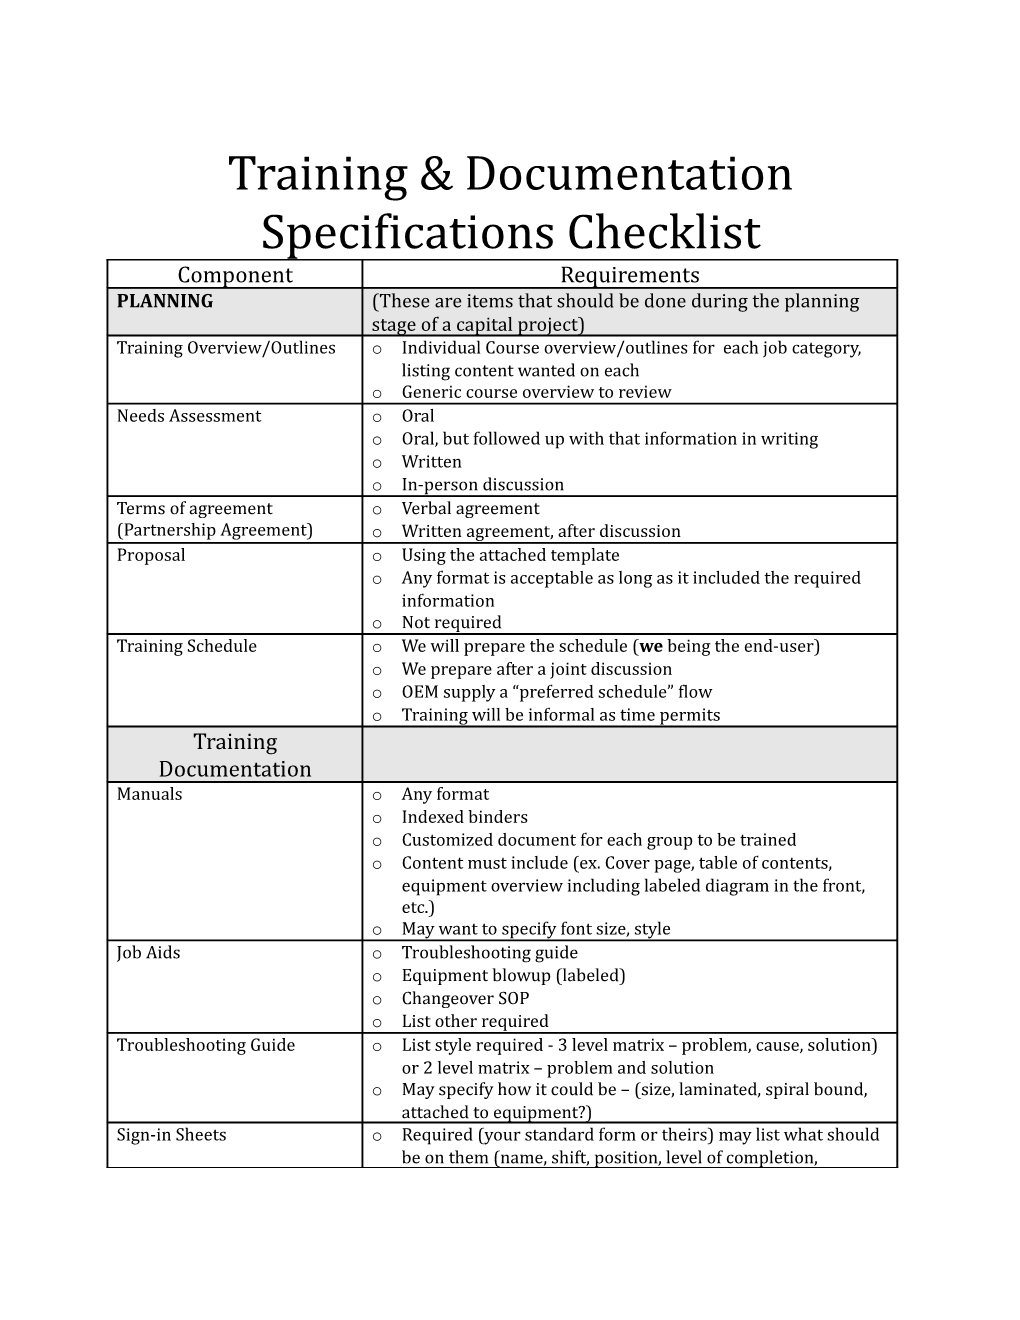 Training & Documentation Specifications